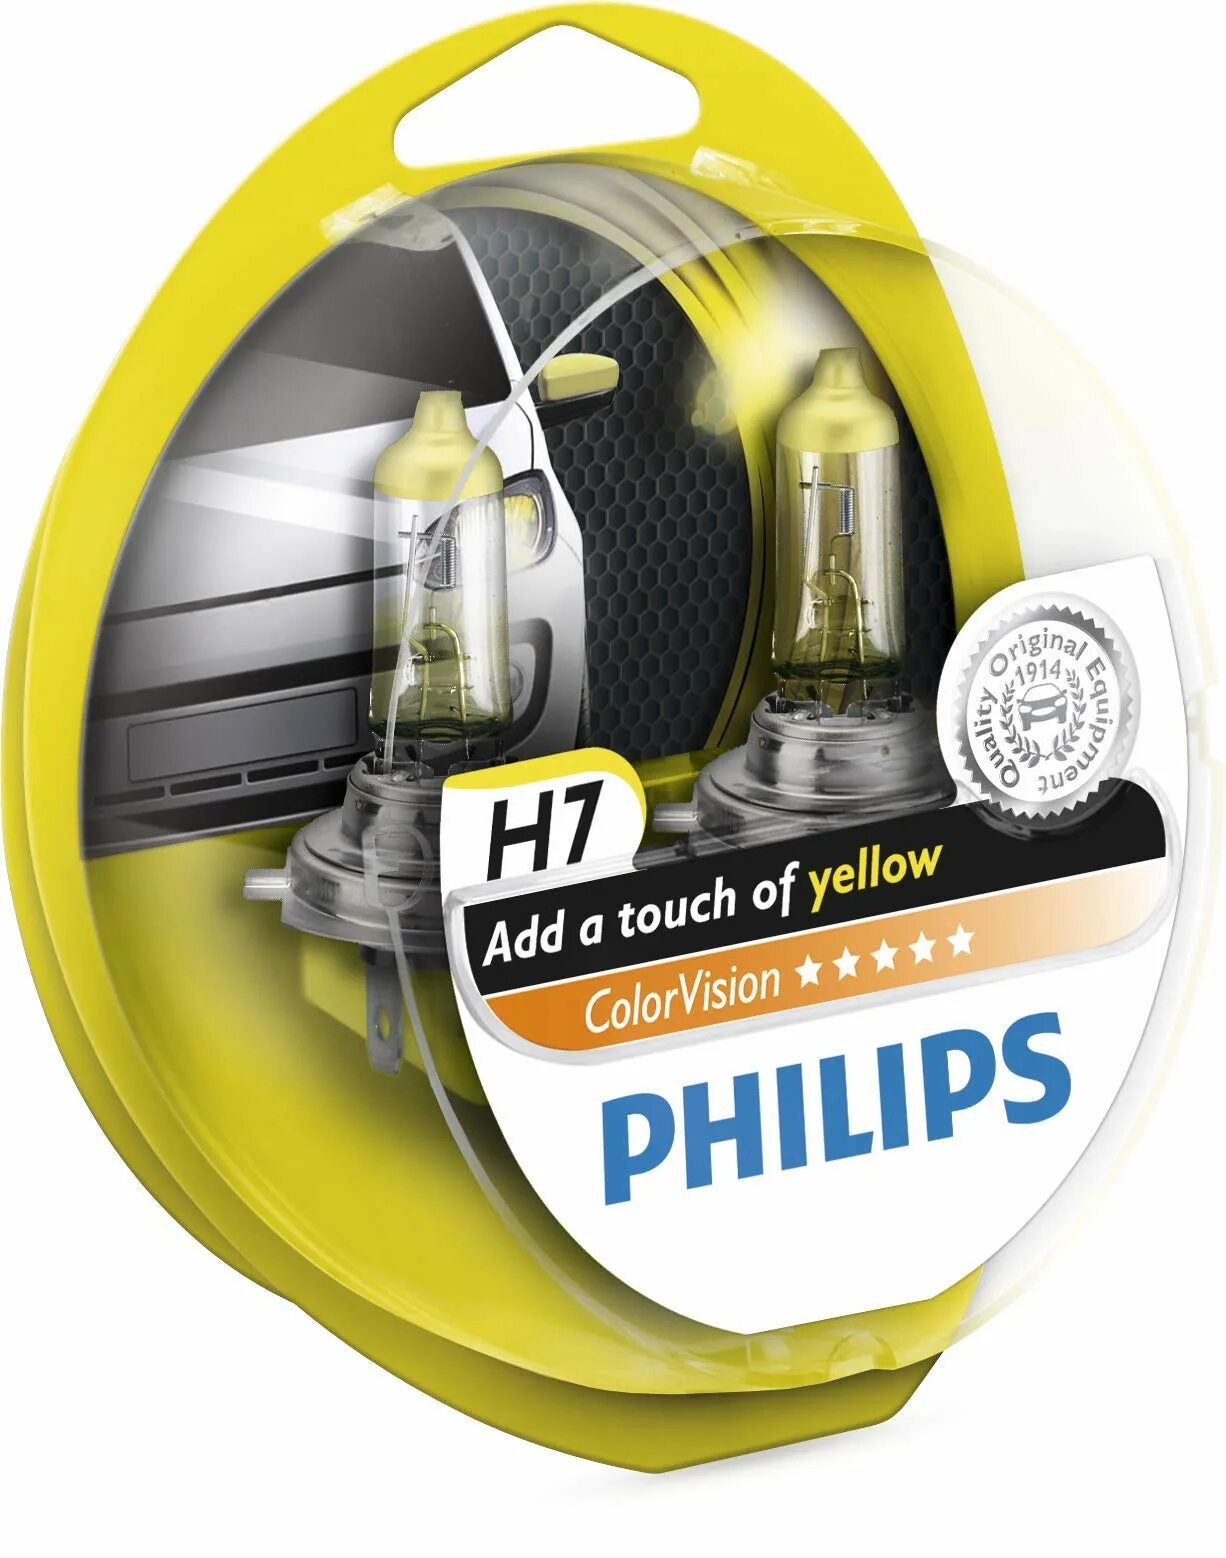 Philips COLORVISION h4 60/55w. Филипс н7 желтого. Лампа желтая н 3 Philips Color Vision. Лампа Филипс h4 колор Вижн жёлтая. Philips h4 купить